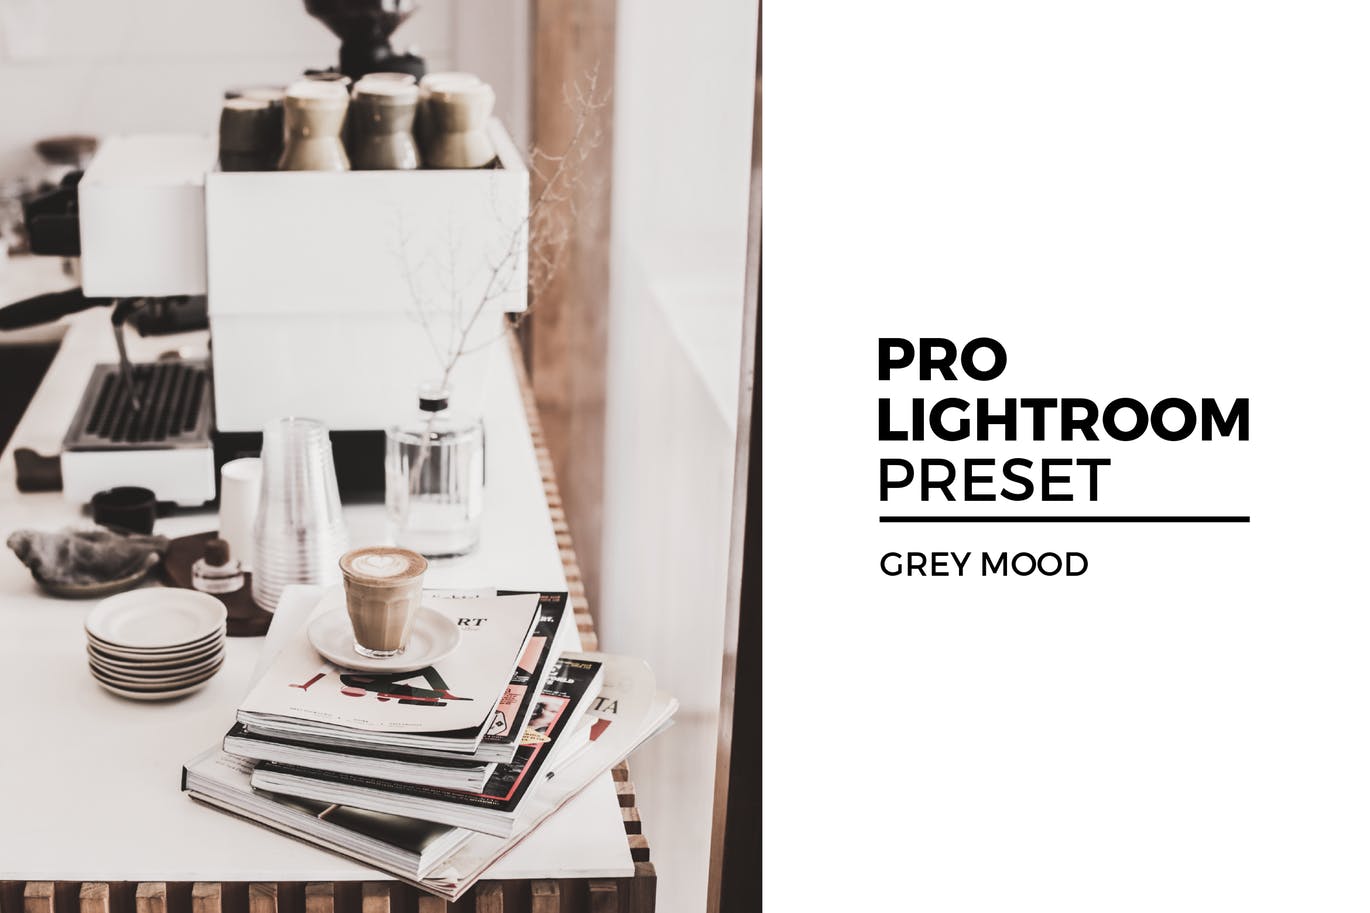 Grey Mood Lightroom Preset